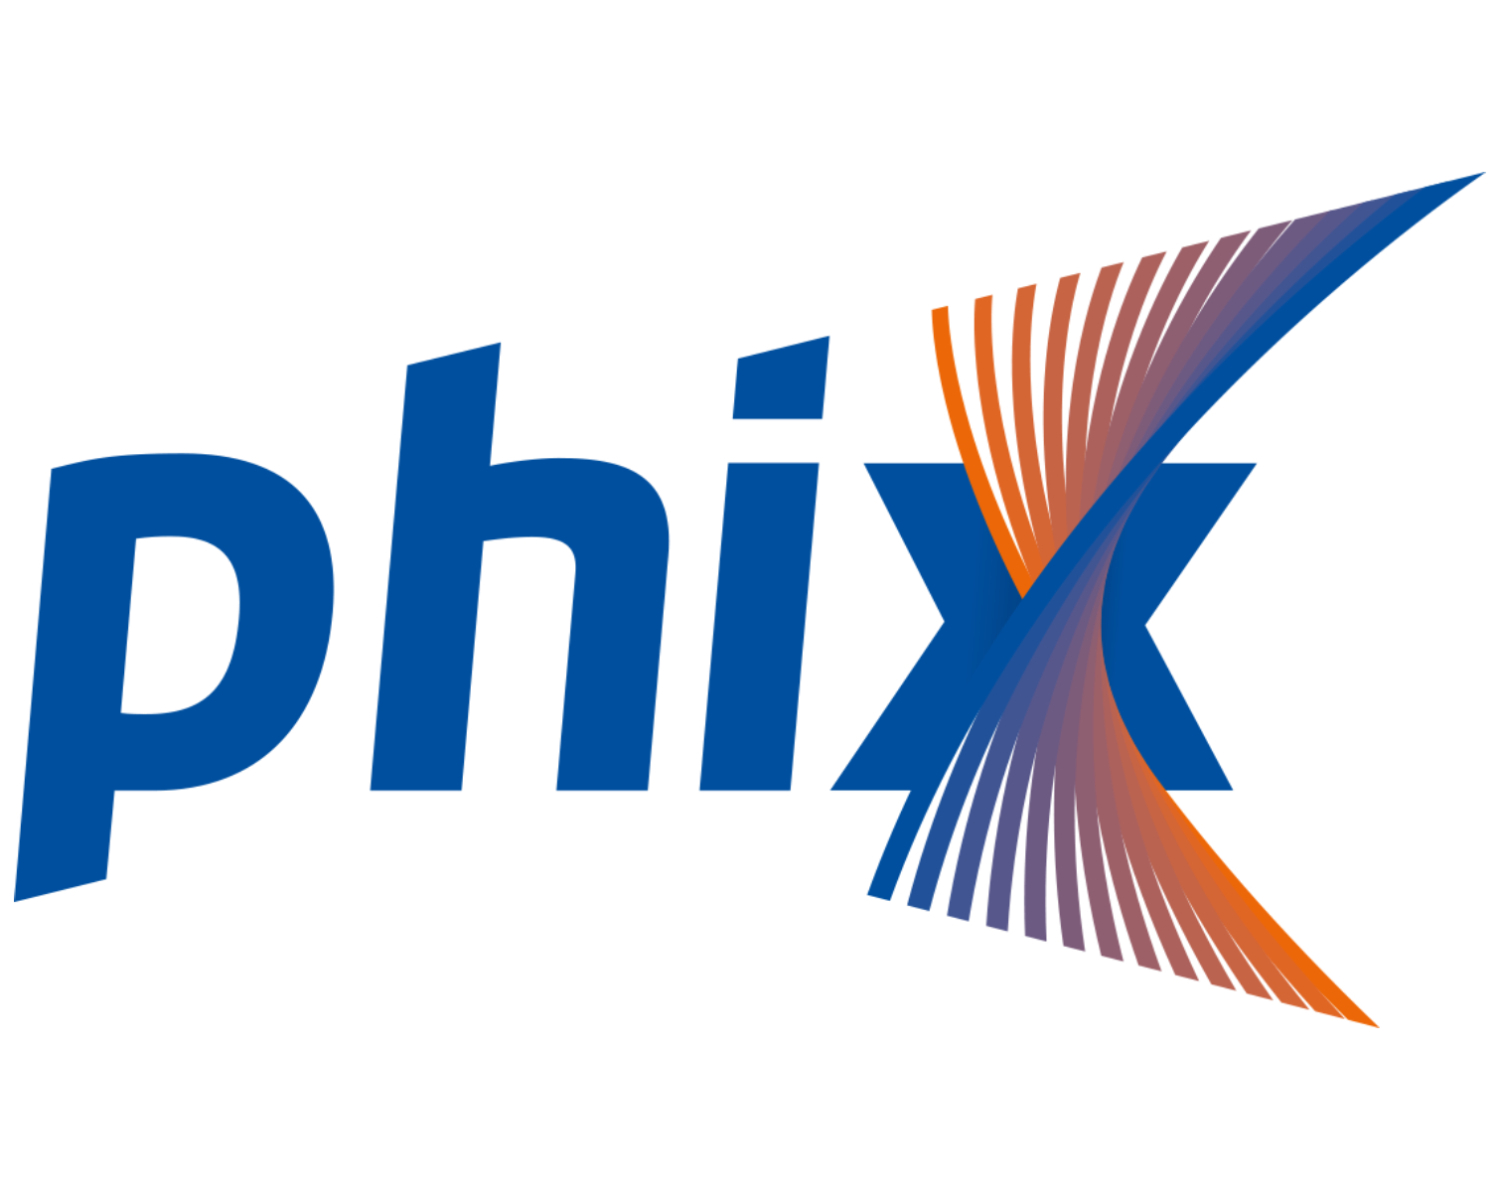 PHIX Photonics Assembly